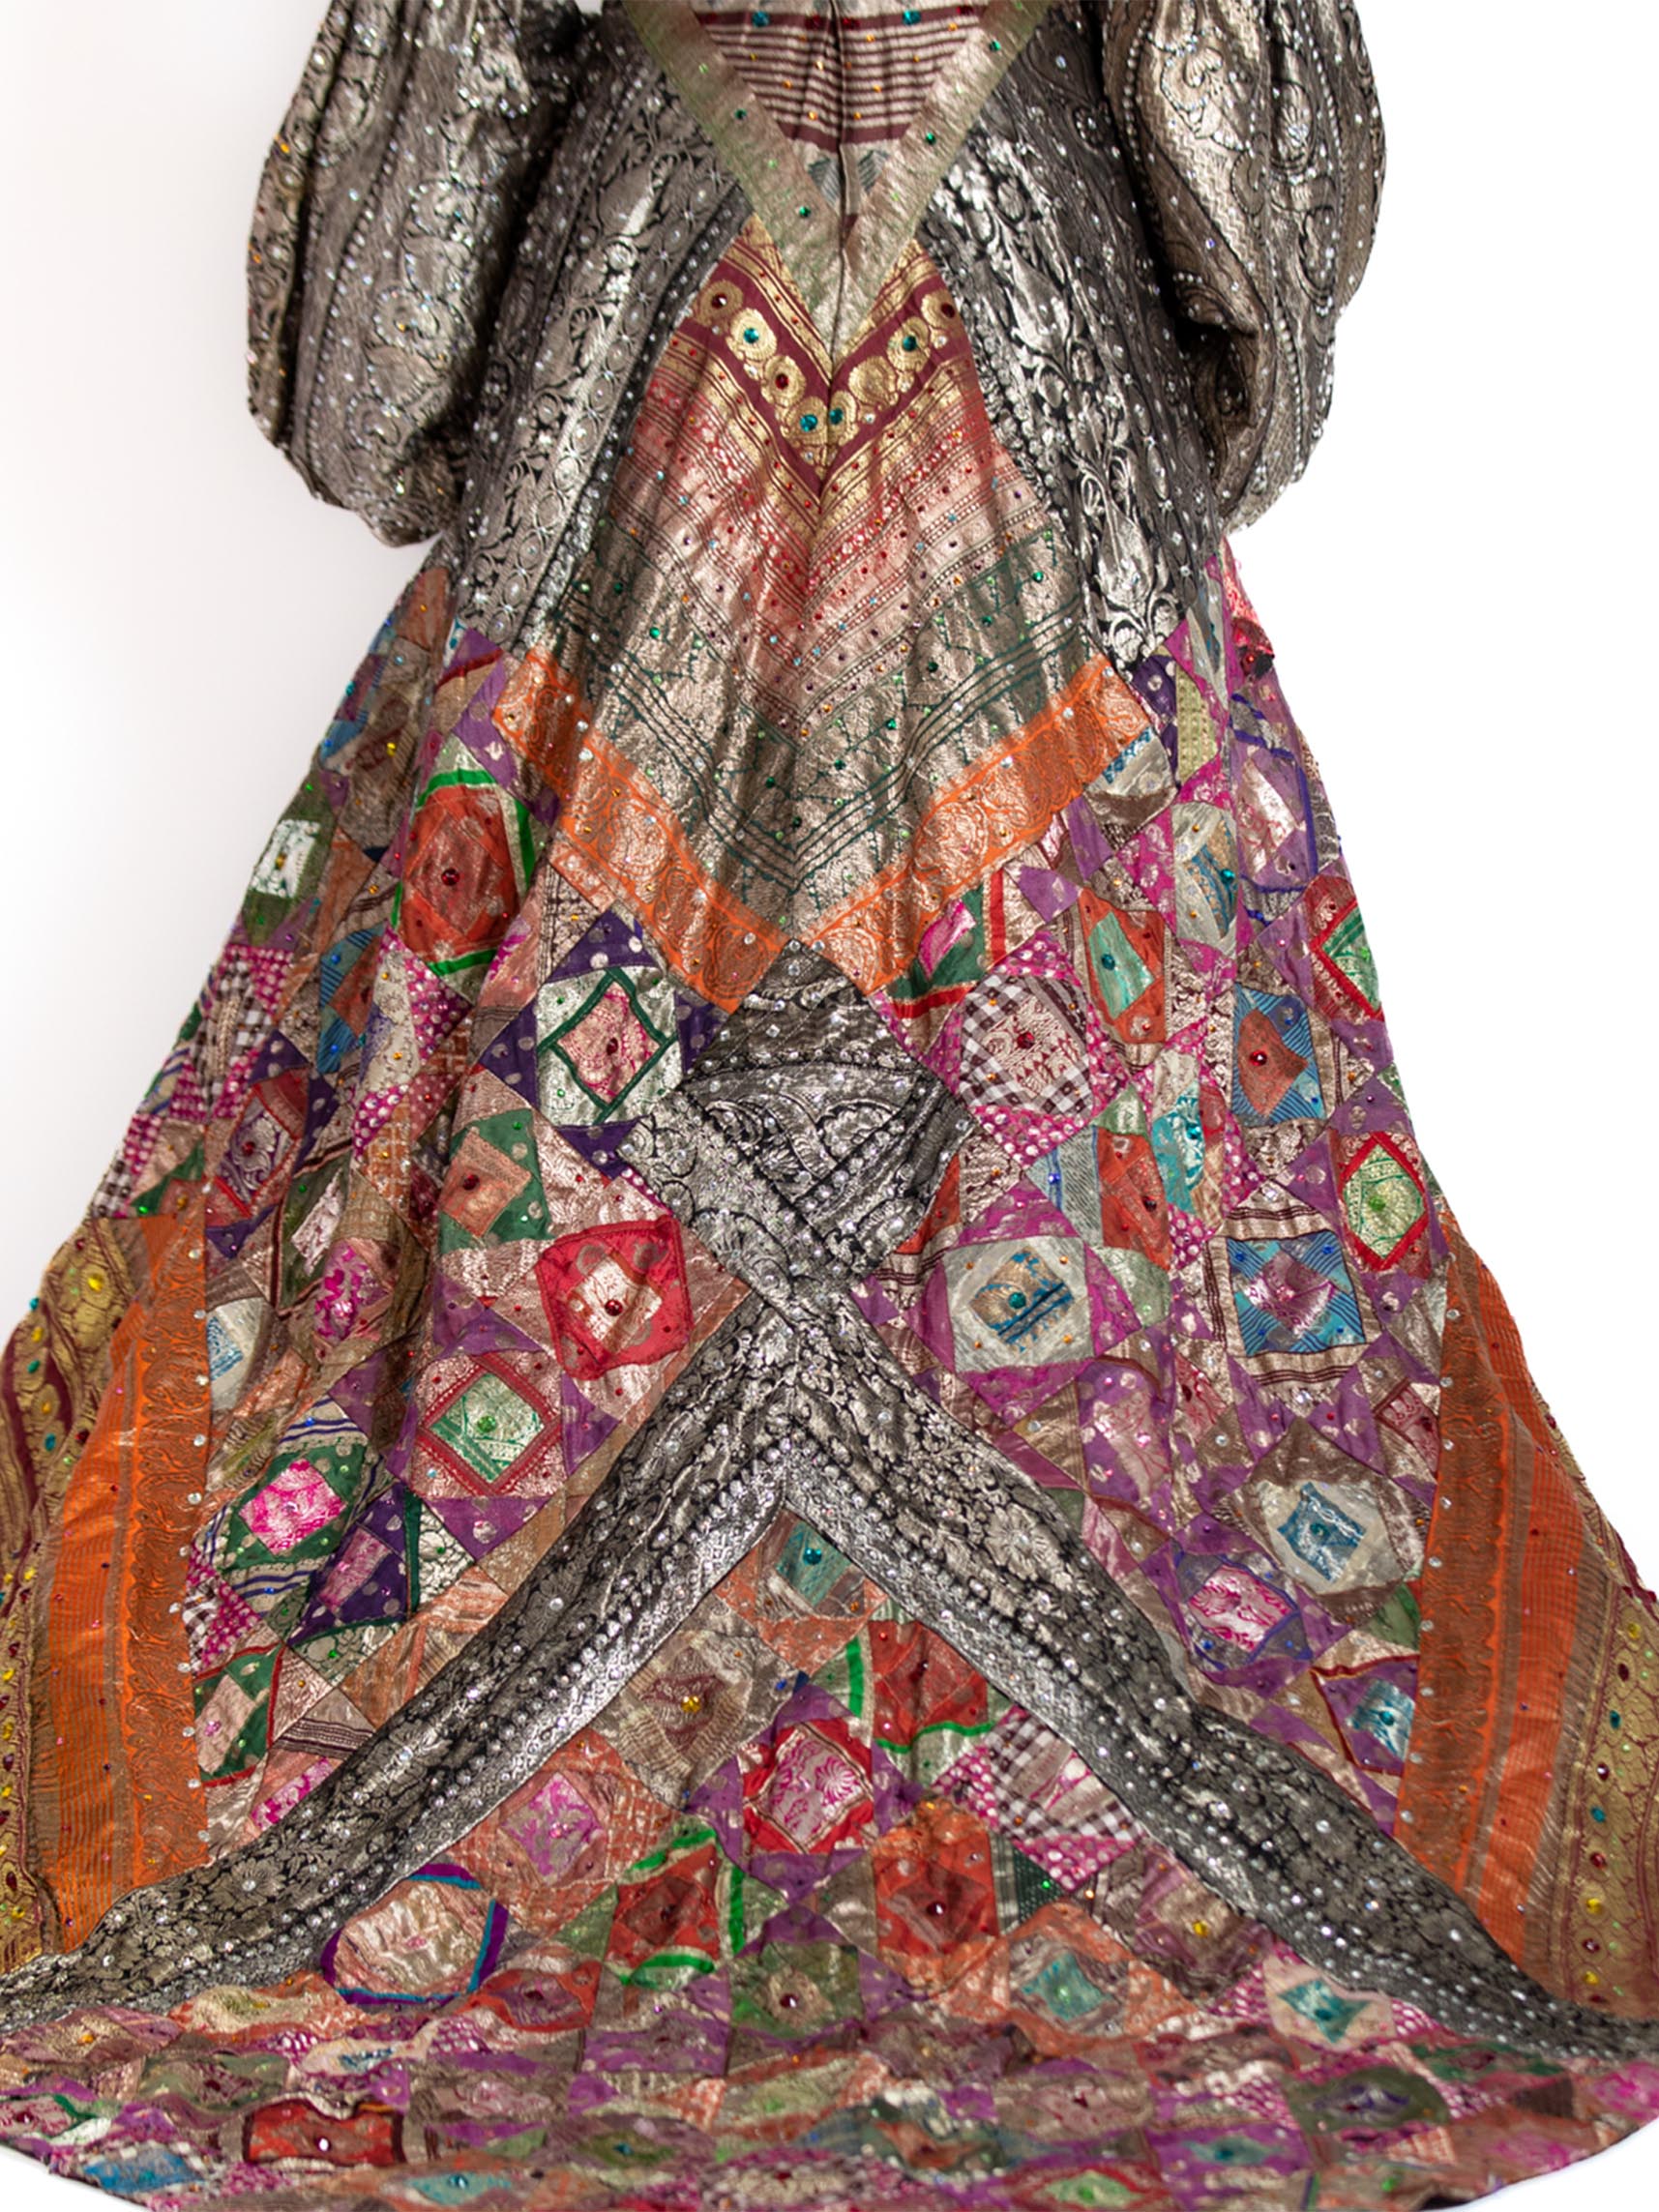 Vintage Jean-louis Scherrer Dress Maxi Dress Stunning Sheer 